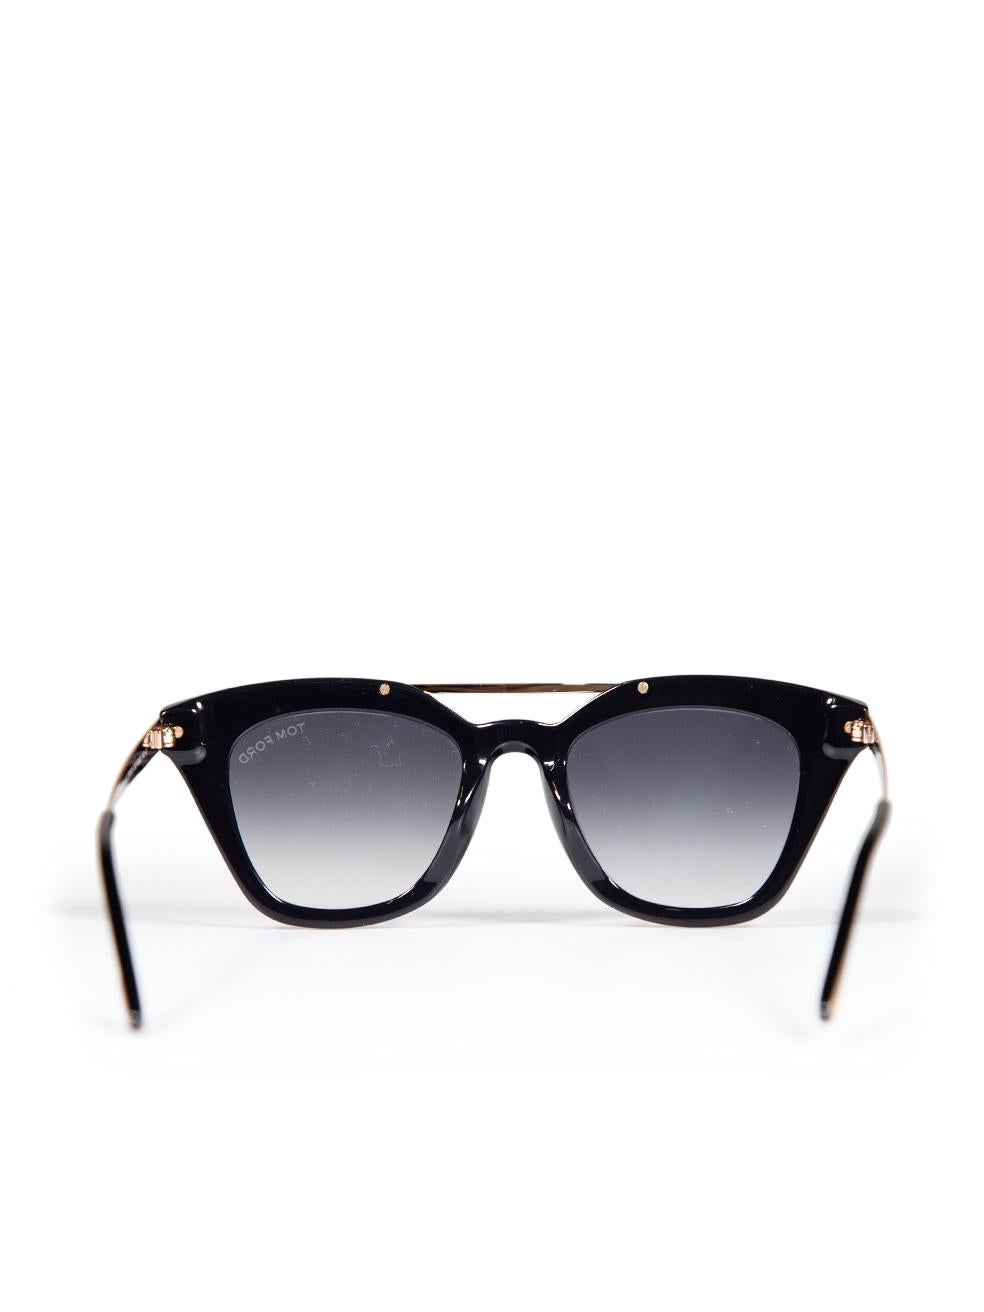 Women's Tom Ford Shiny Black Anna Square Sunglasses For Sale